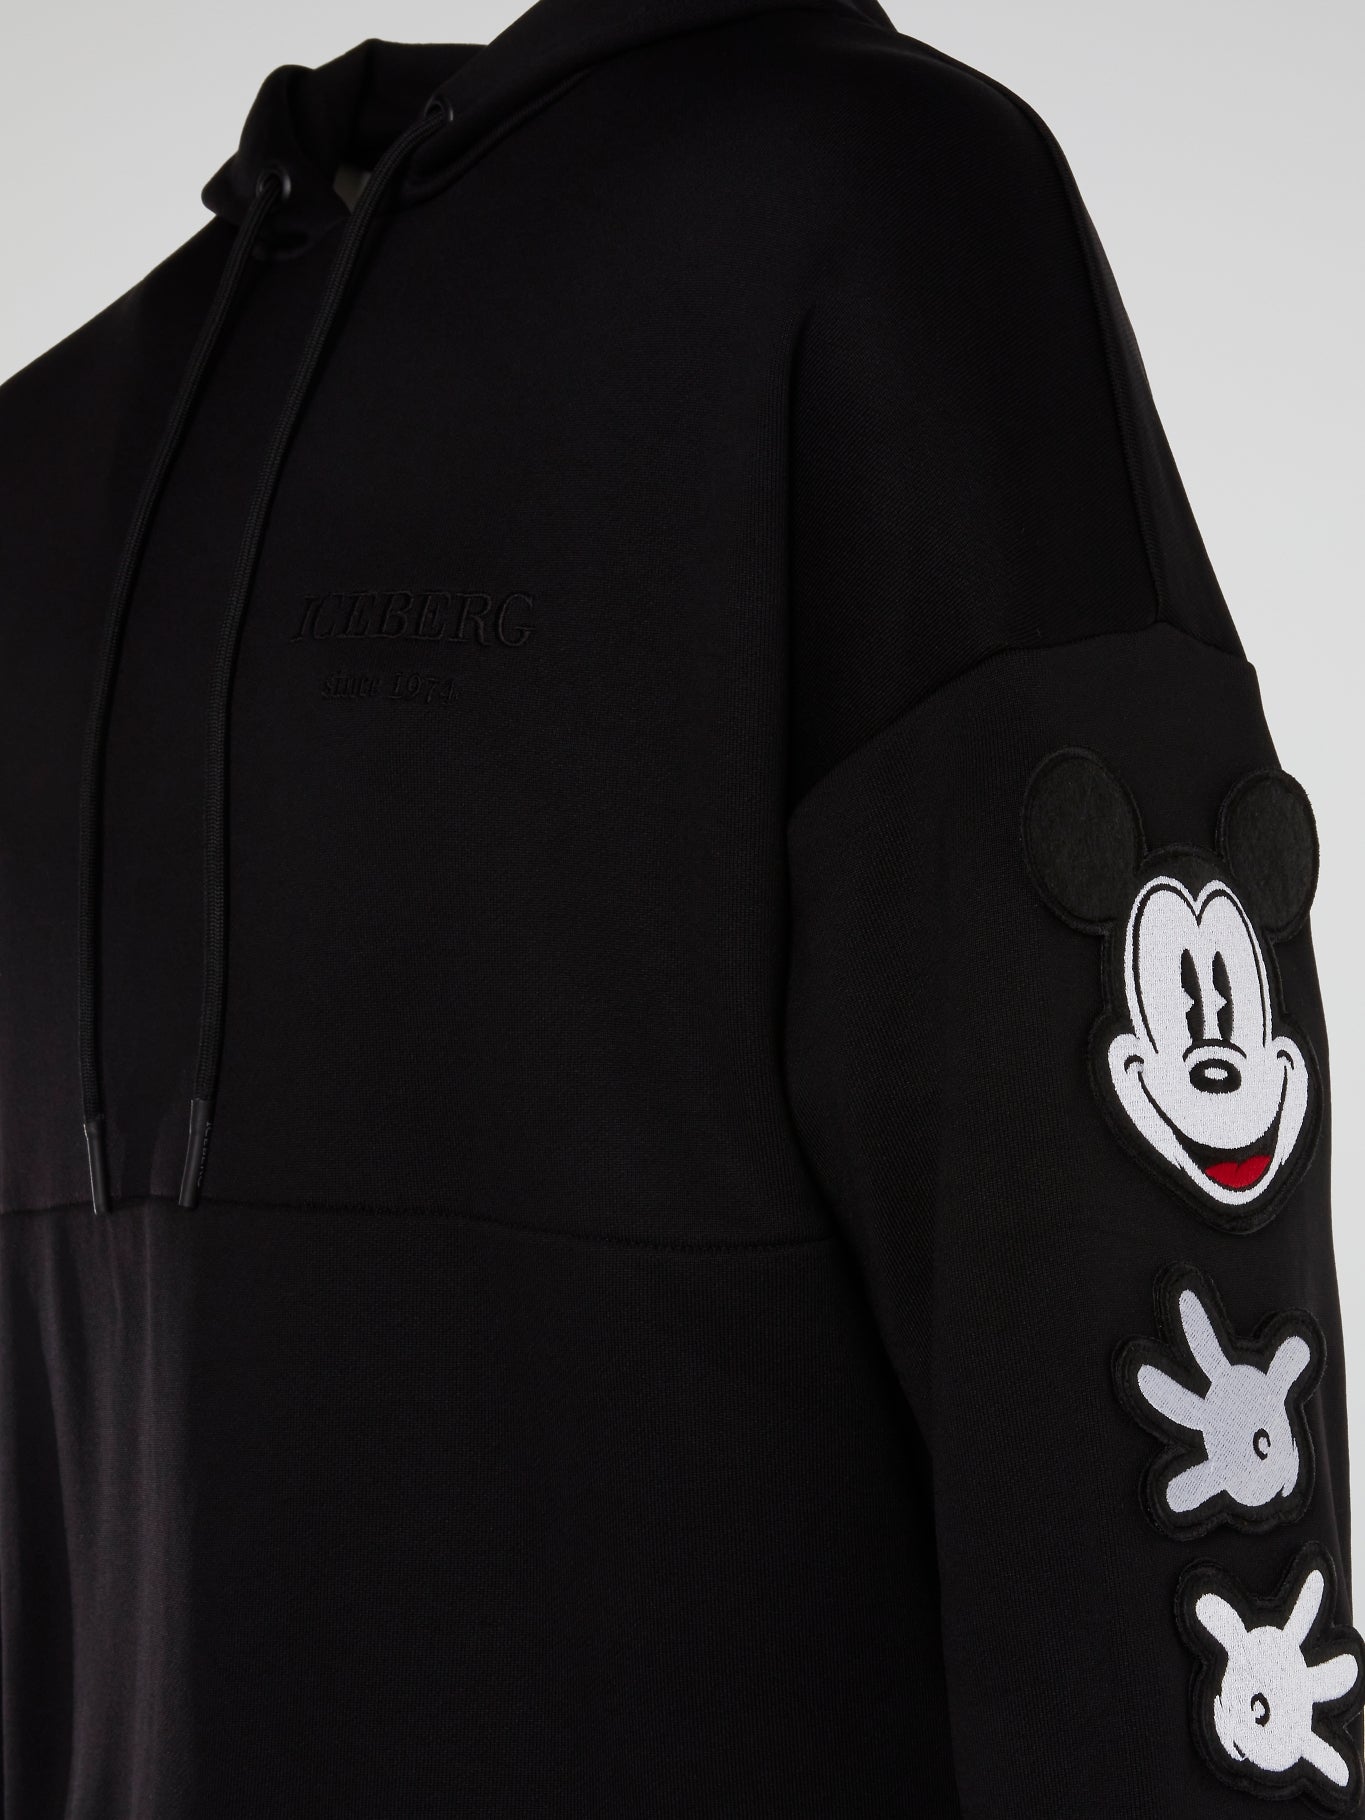 Mickey Mouse Sleeve Design Hooded Sweatshirt